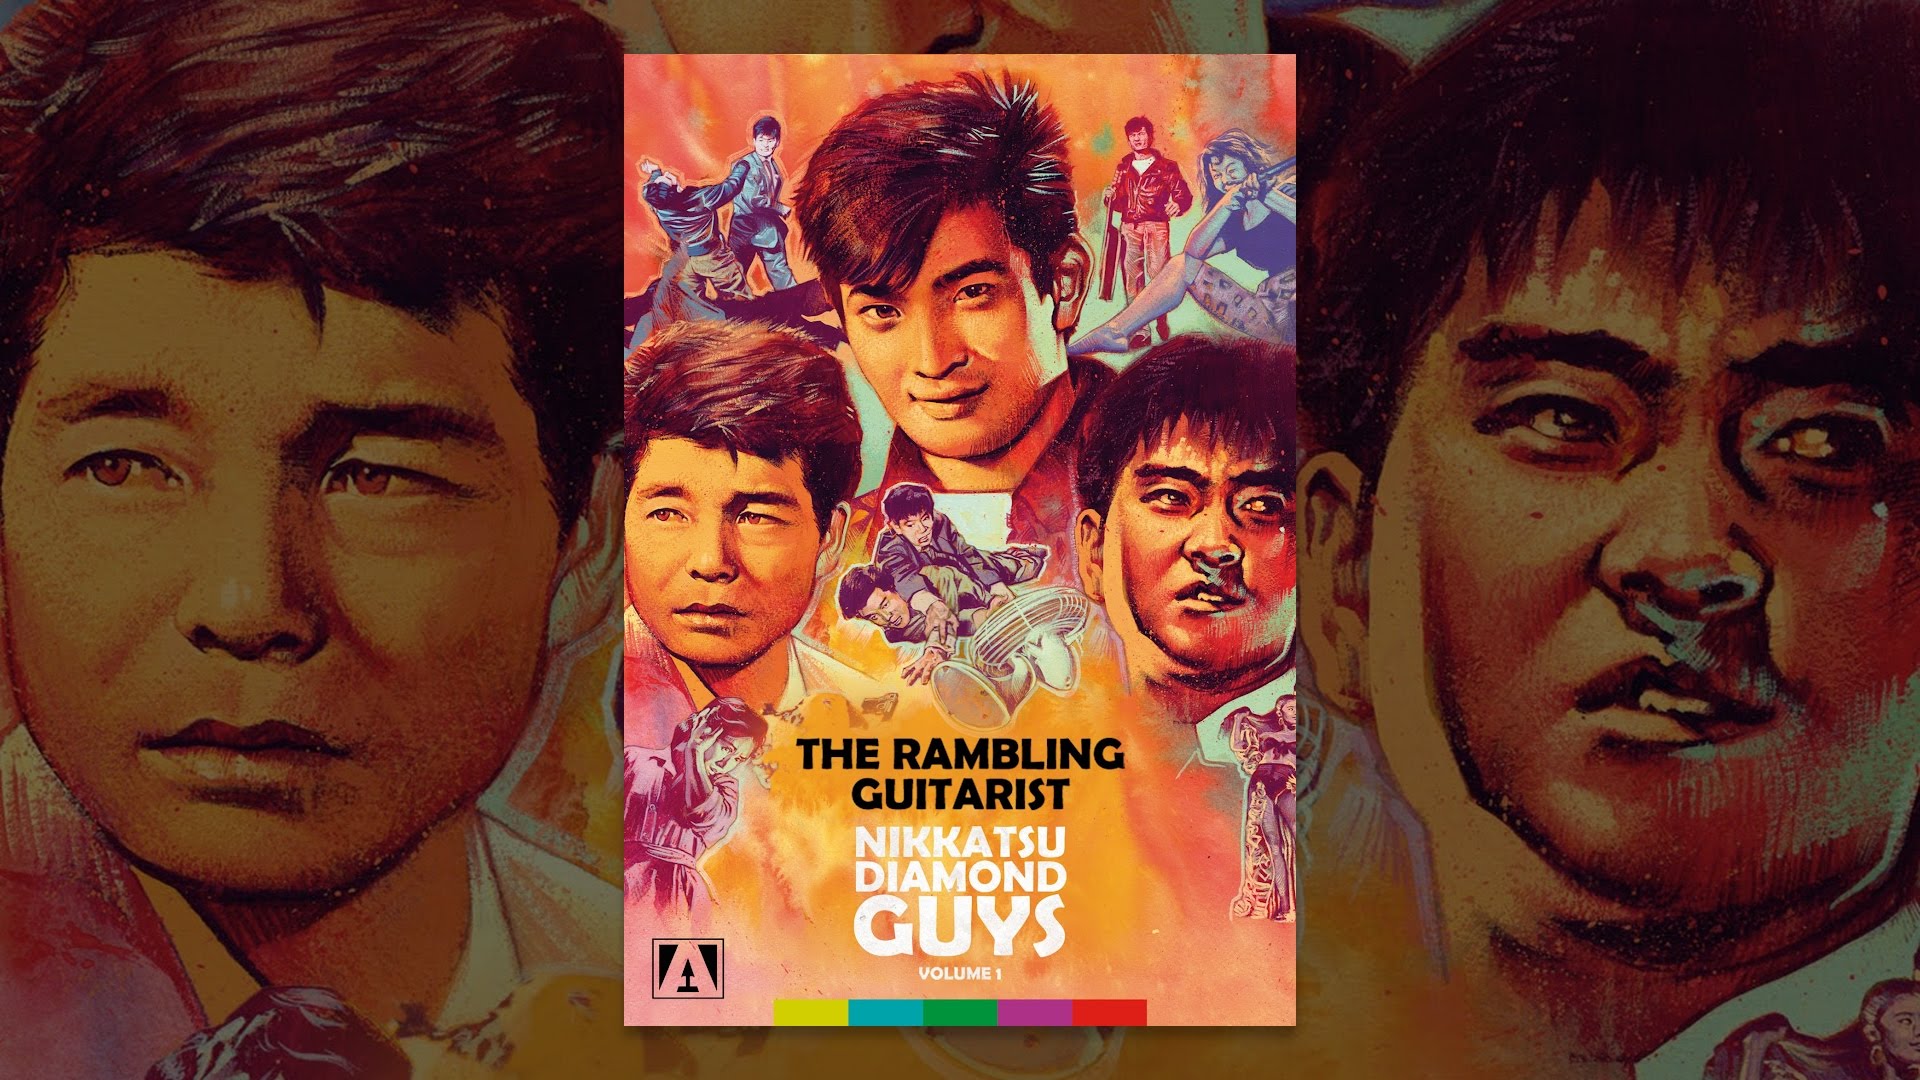 Nikkatsu Diamond Guys: The Rambling Guitarist